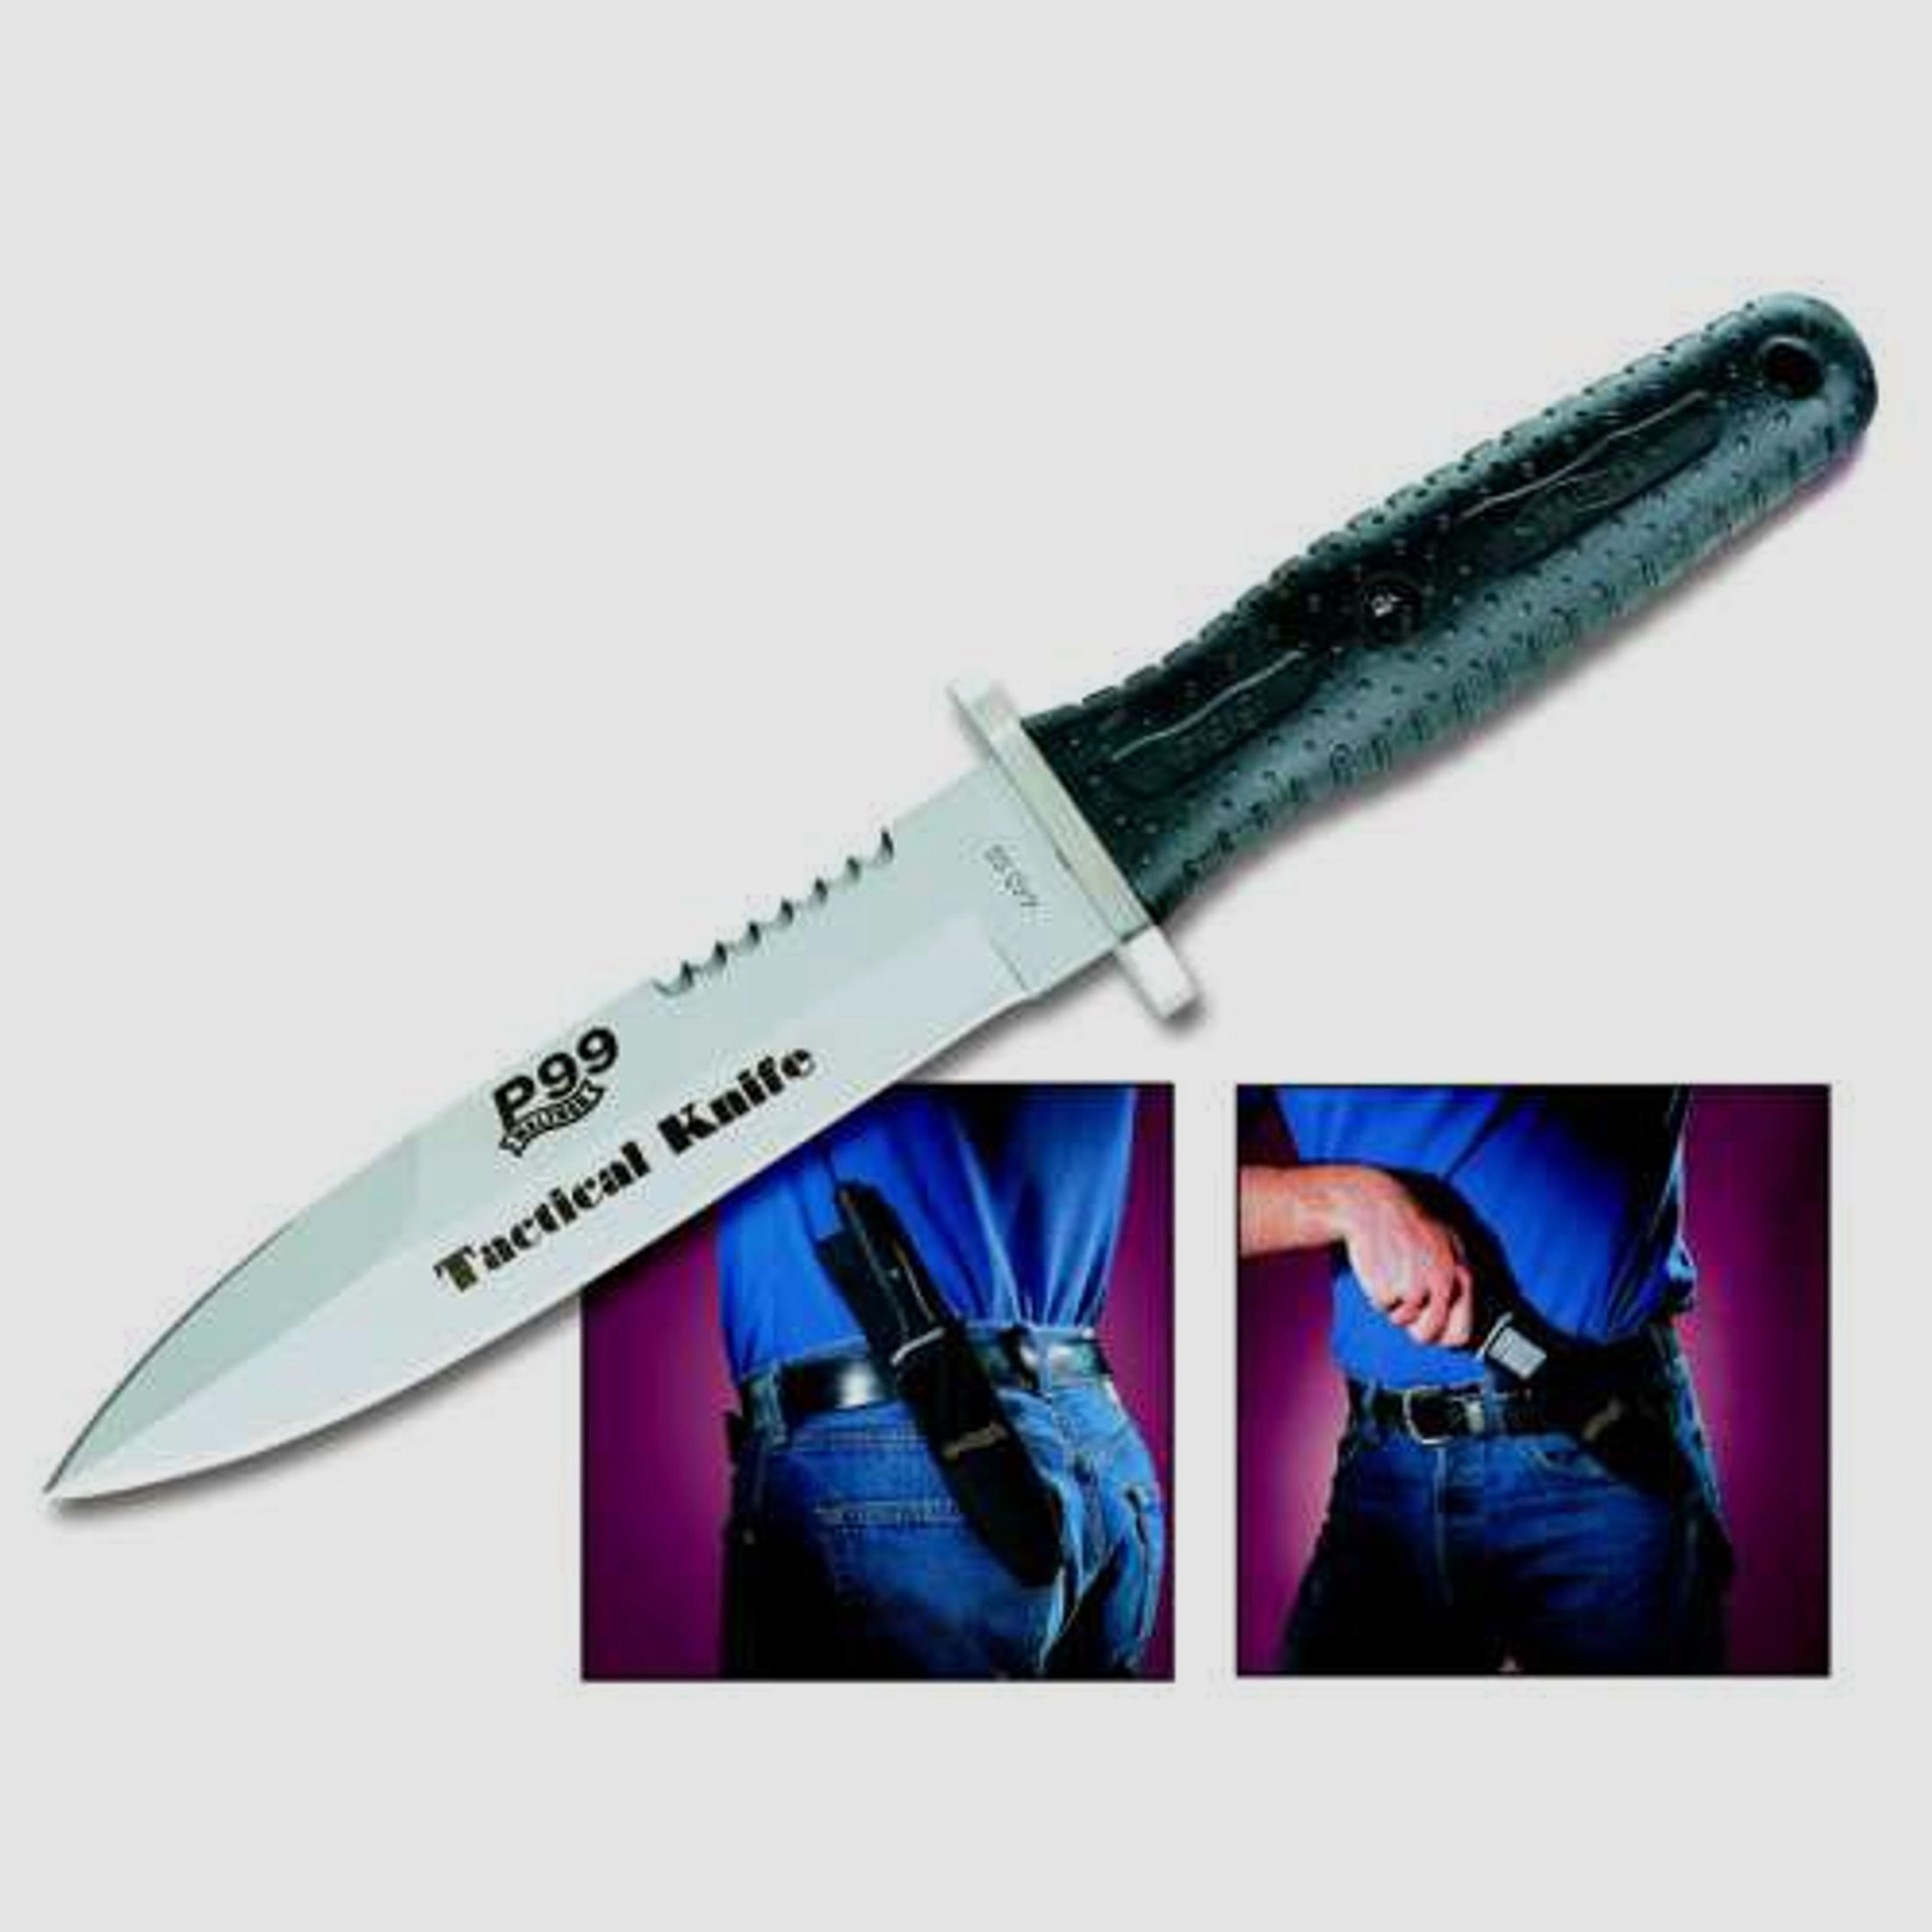 WALTHER Feststehendes Messer P99 Tactical Gummigriff 15,0cm mit Holster